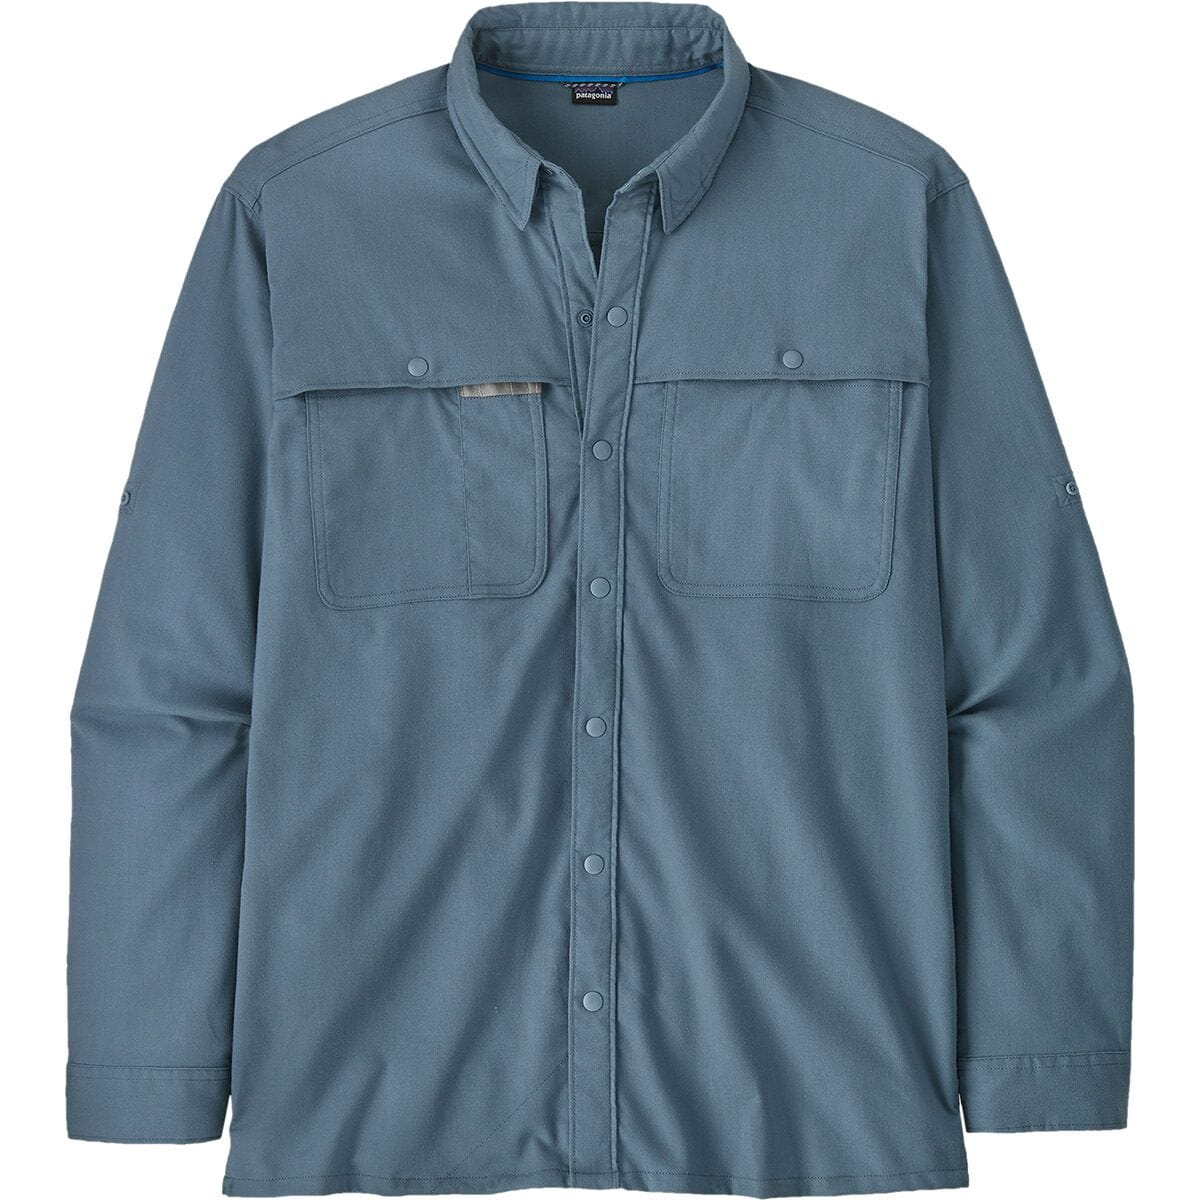 Patagonia Sol Patrol Fly Fishing Shirt Men's Size XXL Long Sleeve, Blue,  Vented